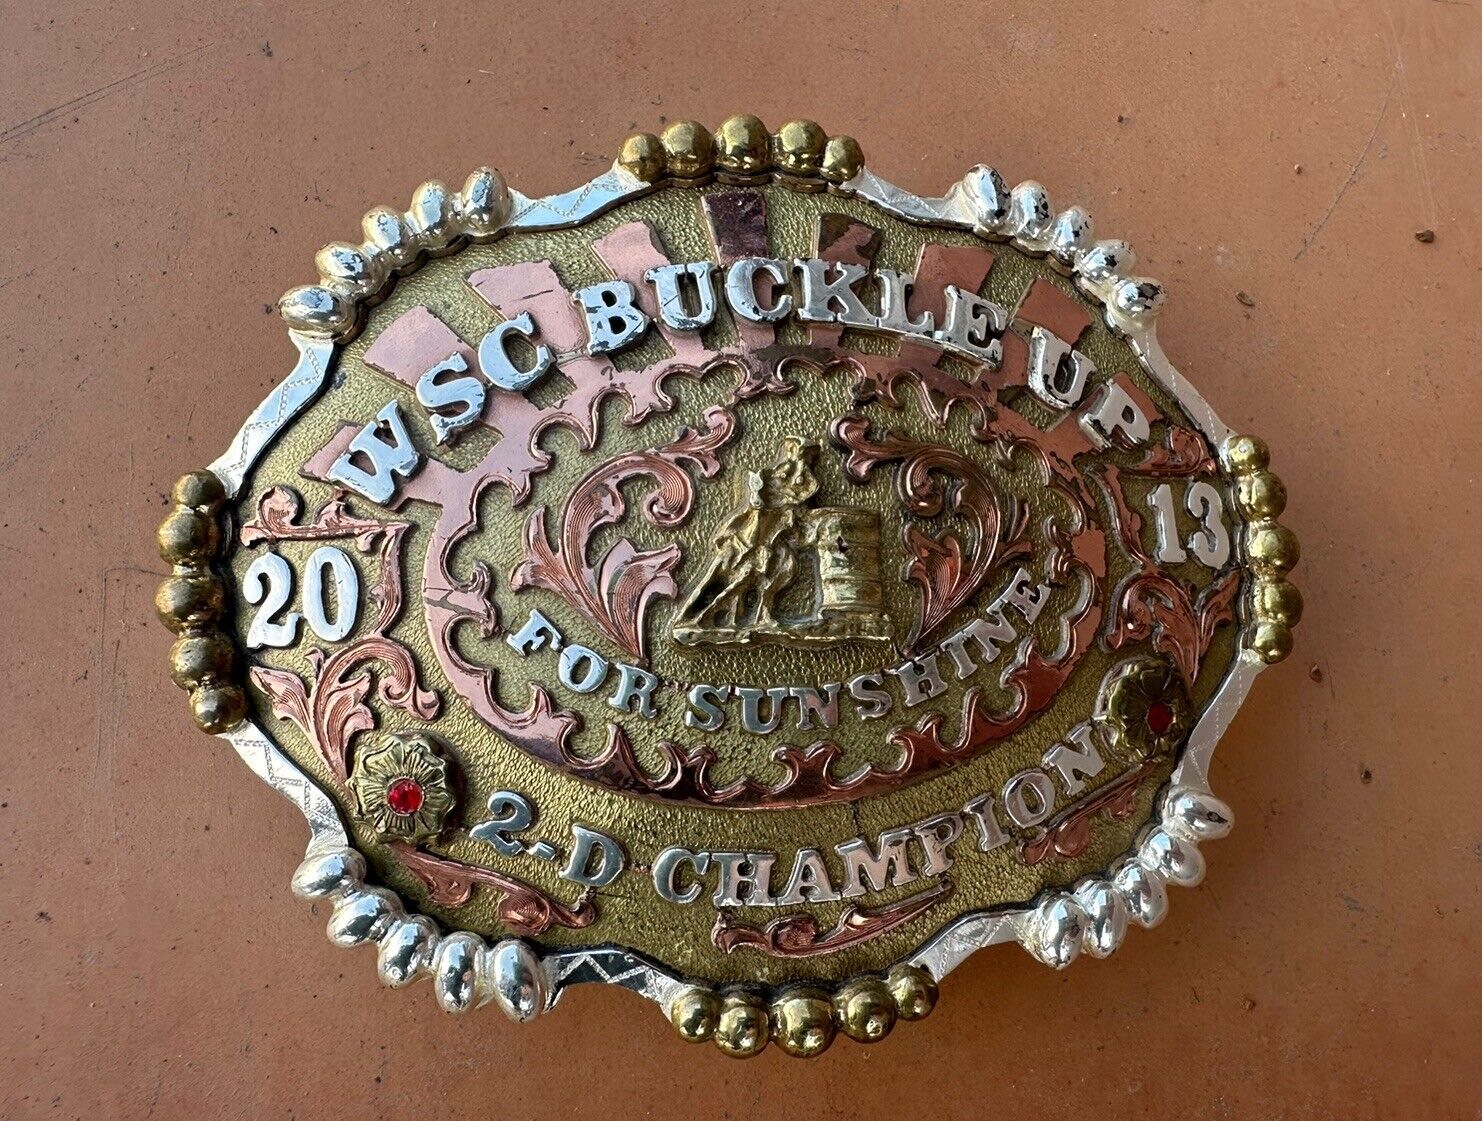 2013 WSC Woman Ranch 2-D Champion Rodeo CORRIENTE Trophy Belt Buckle